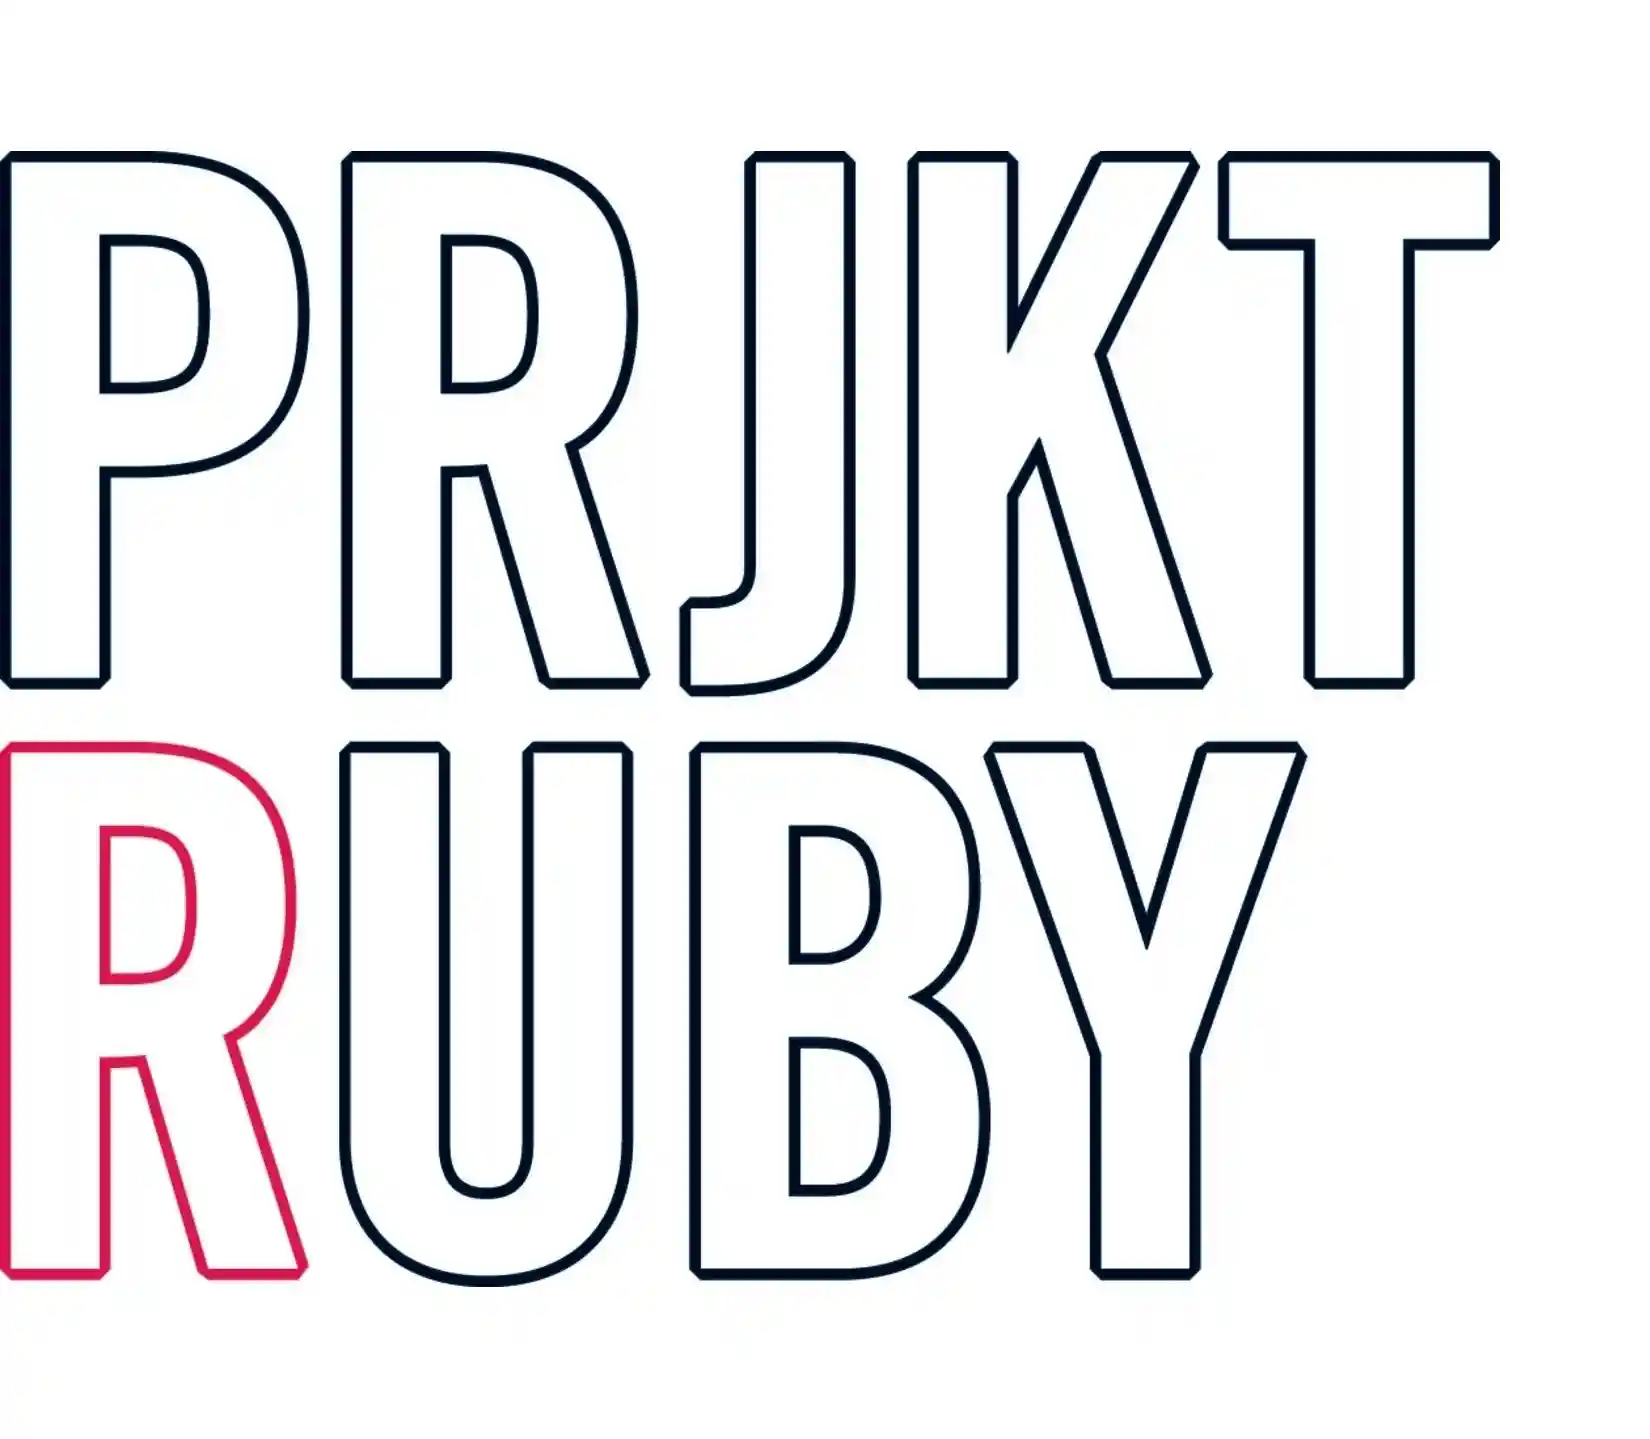  Prjkt Ruby Coupon Codes